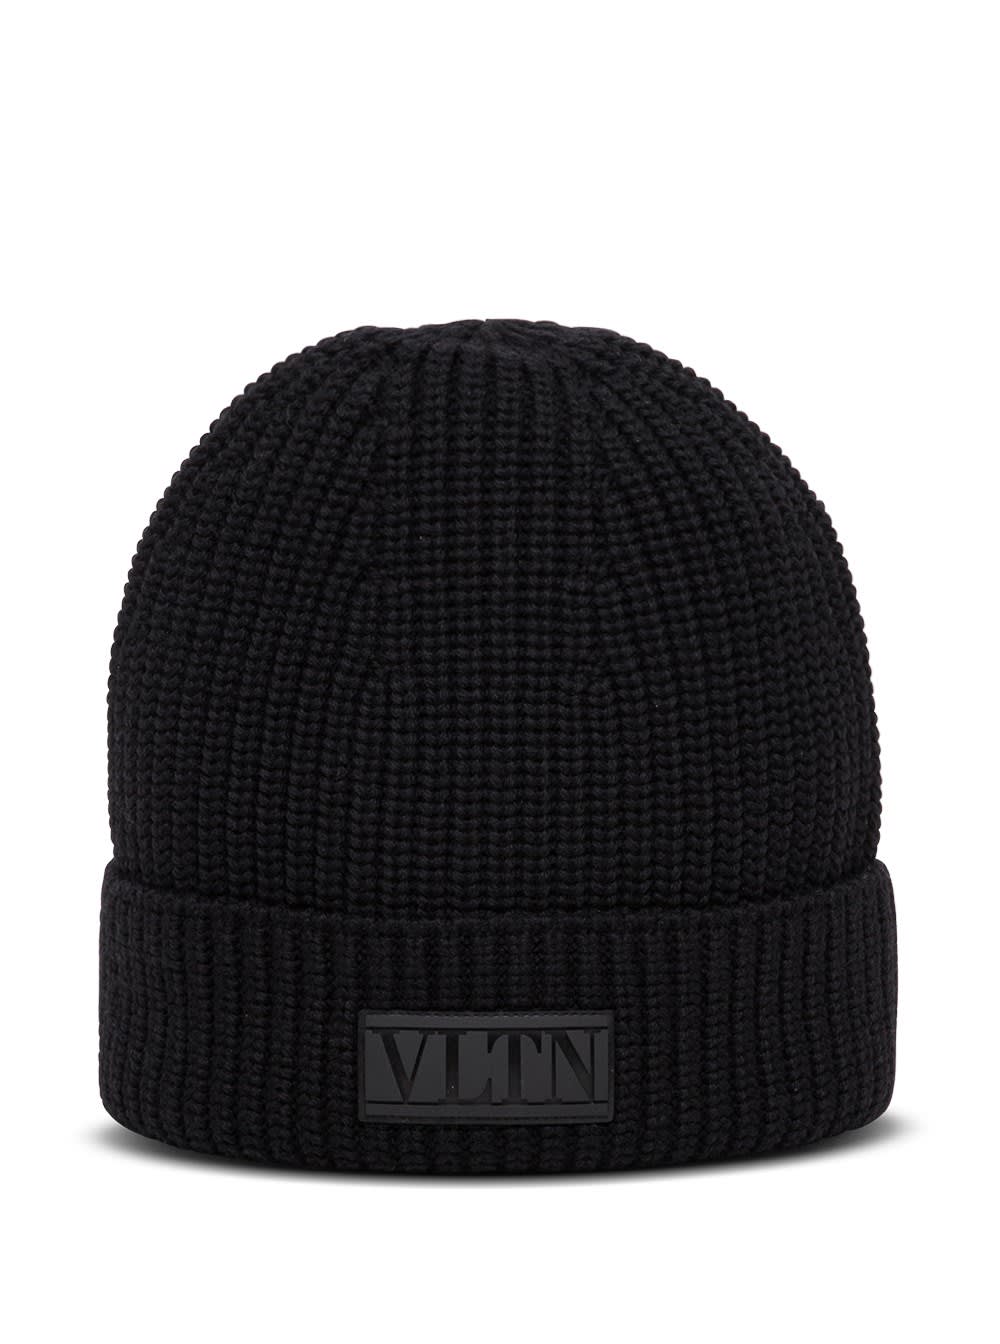 Valentino Garavani Black Wool Hat With Logo